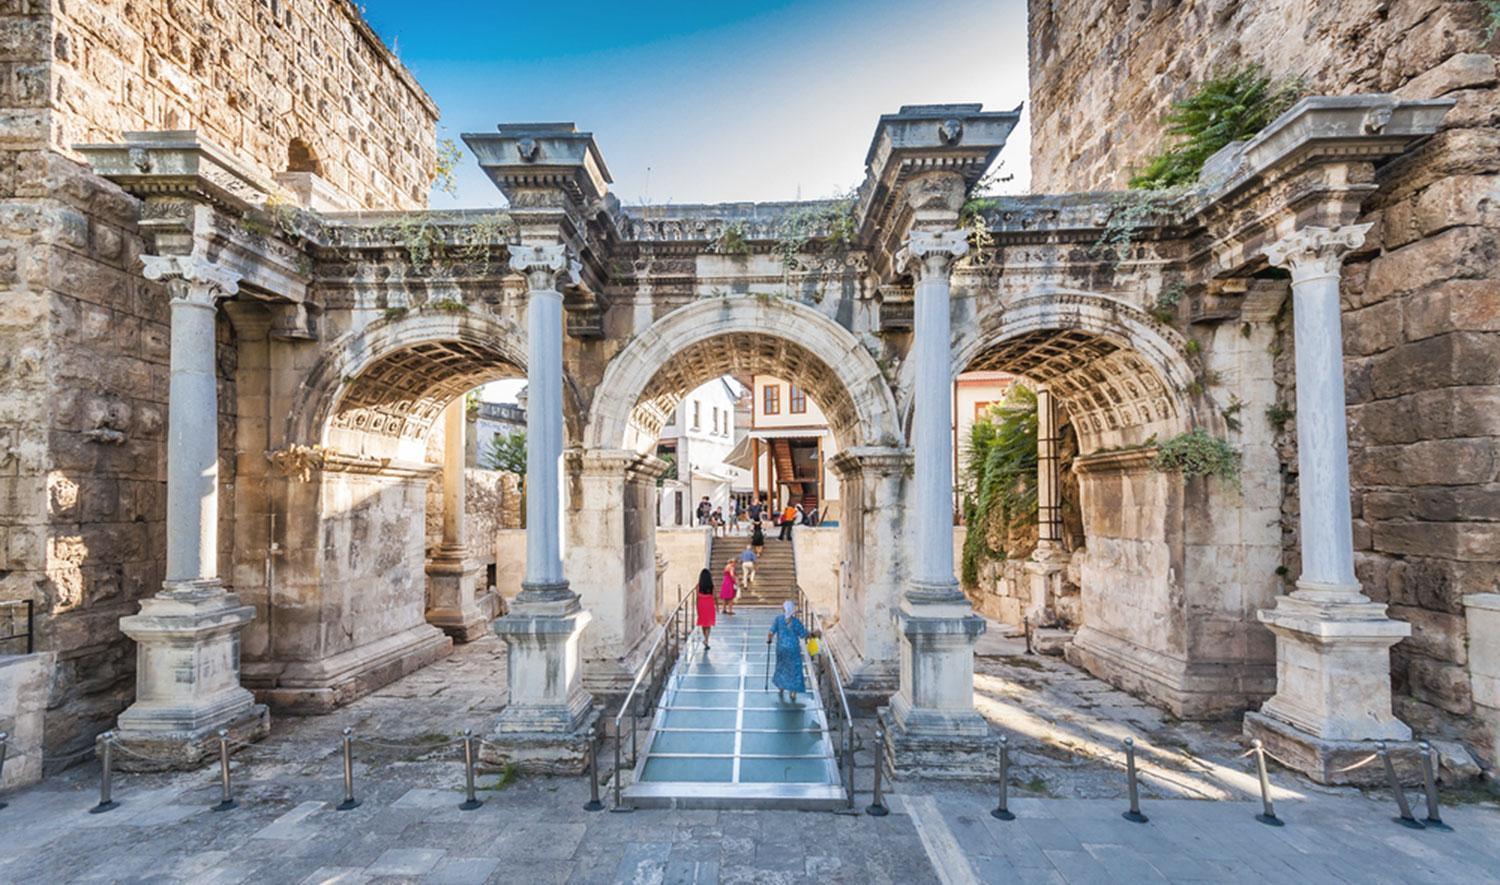 Hadrian’s Gate is located right on Atatürk Boulevard in Antalya’s city center